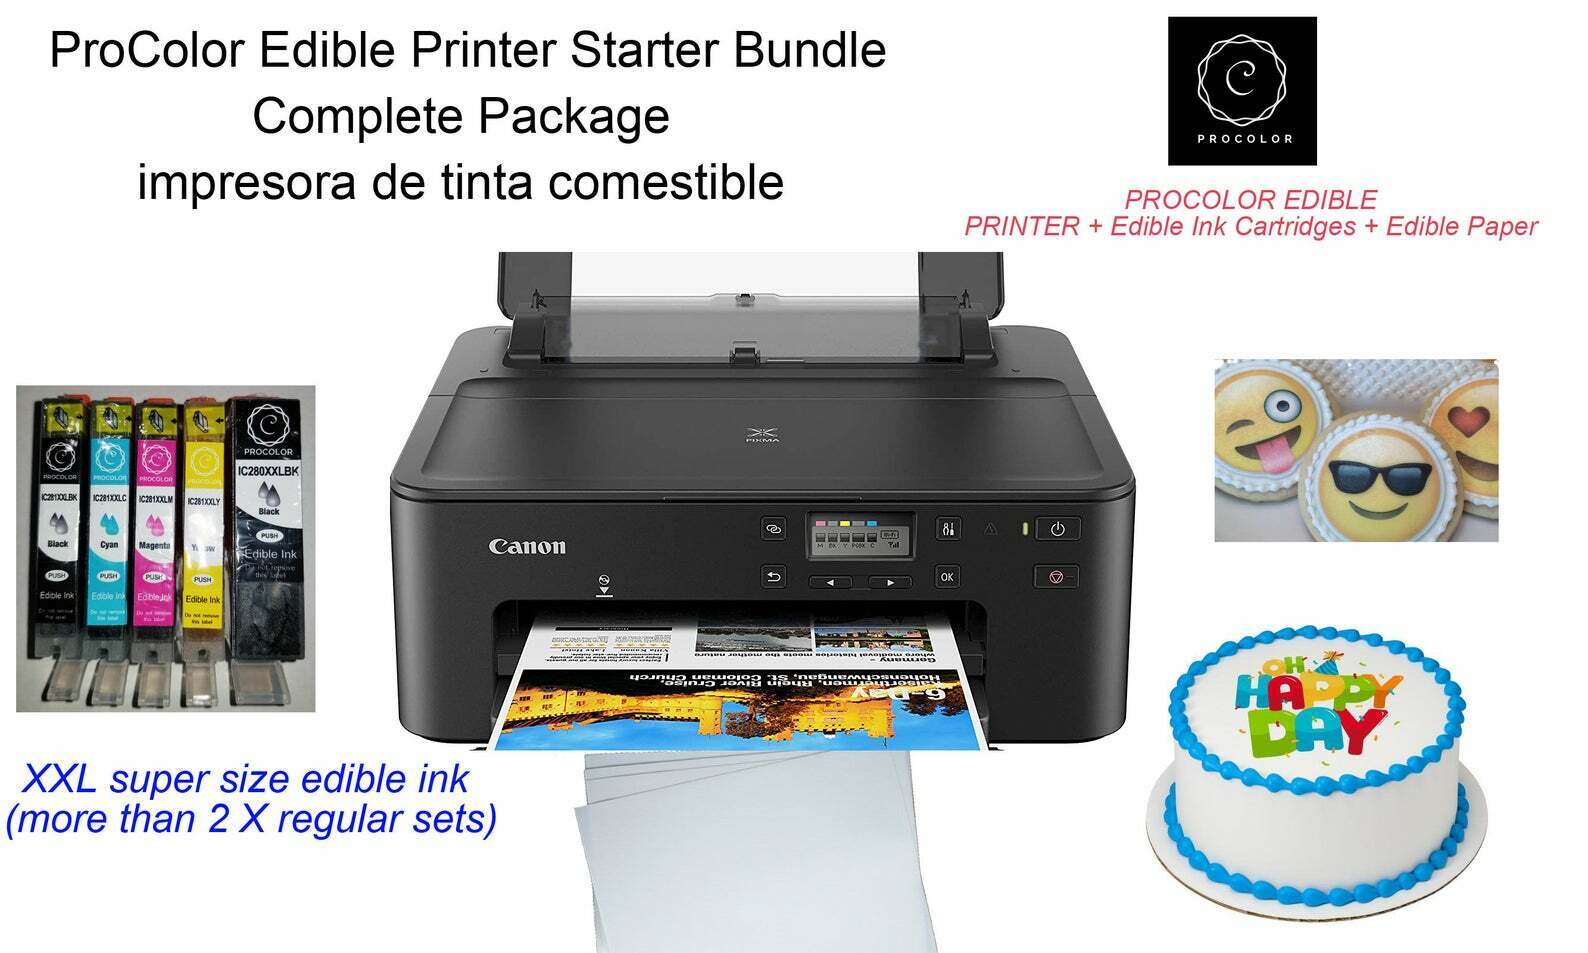  ProColor Edible Printer Bundle with new printer and XXL Edible Cartridges Paper